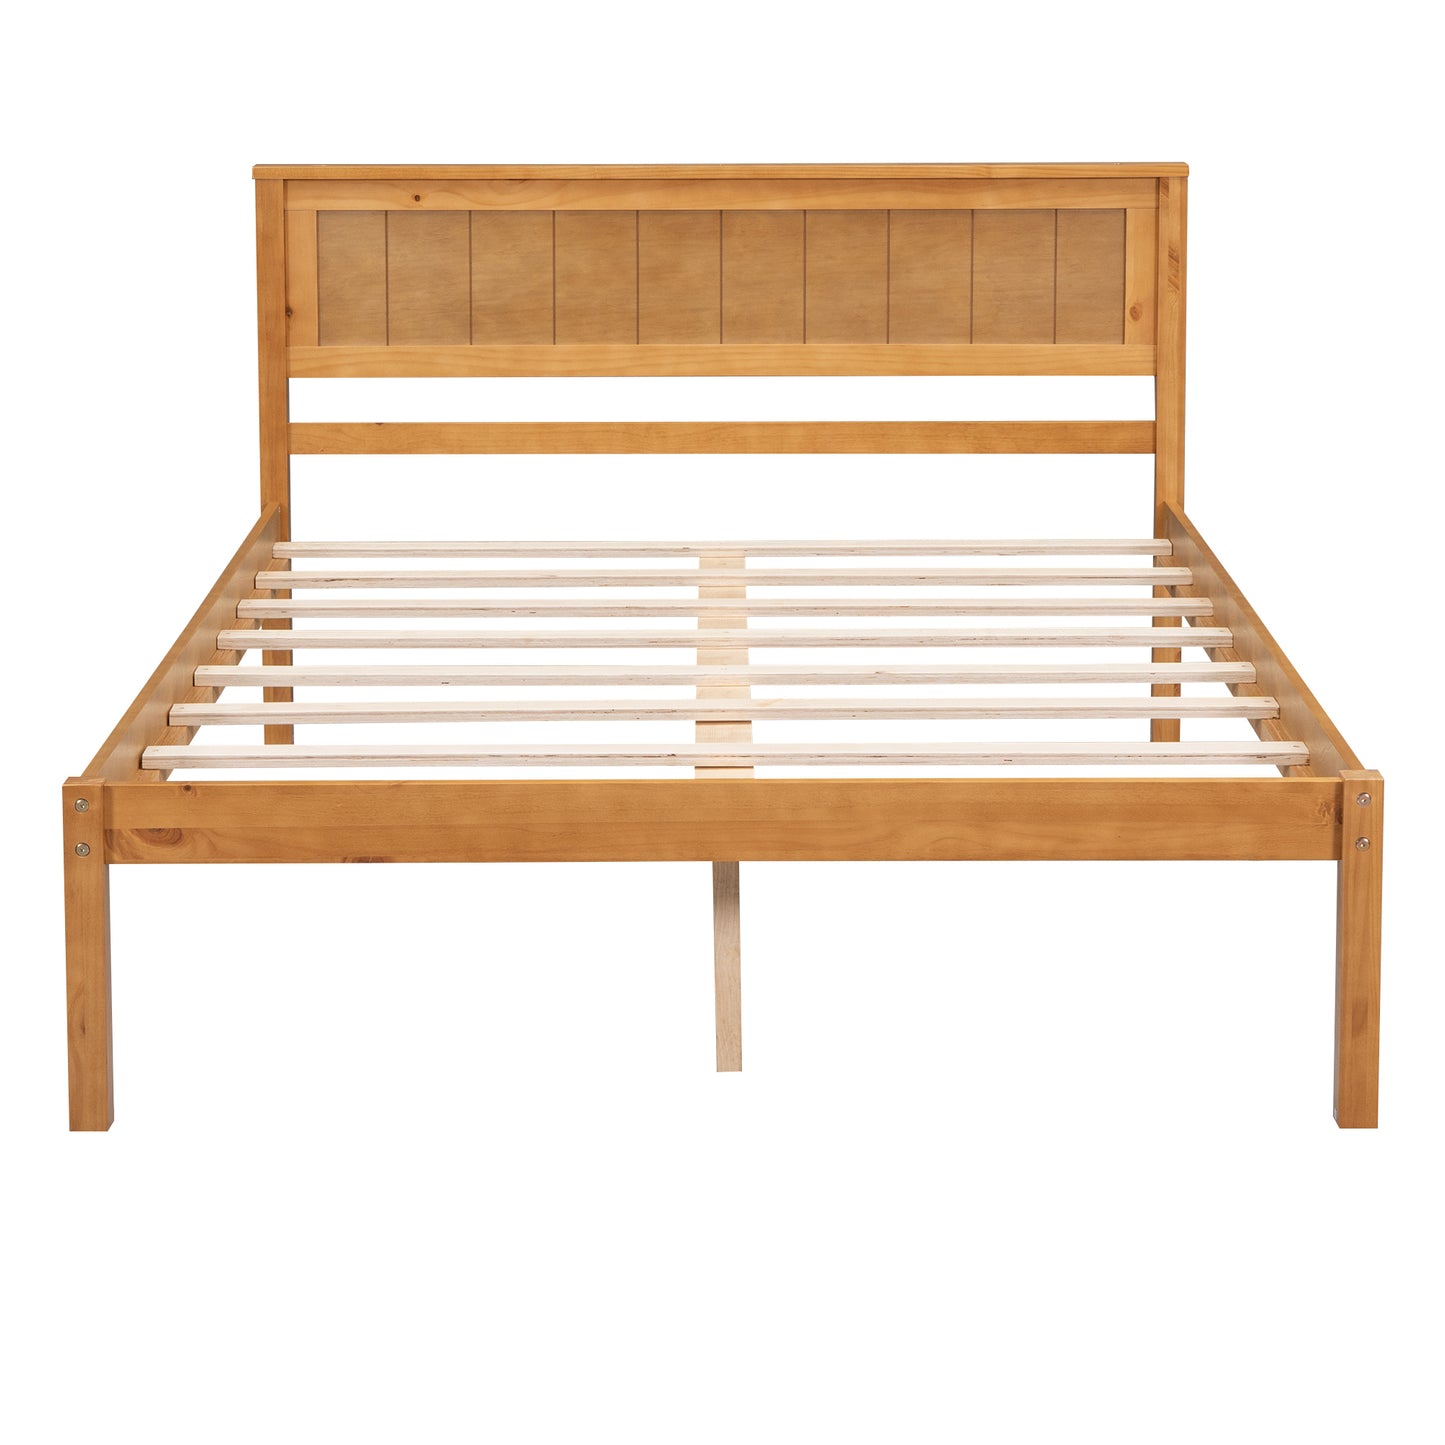 Platform Bed Frame with Headboard, Wood Slat Support, No Box Spring Needed, Full, Oak